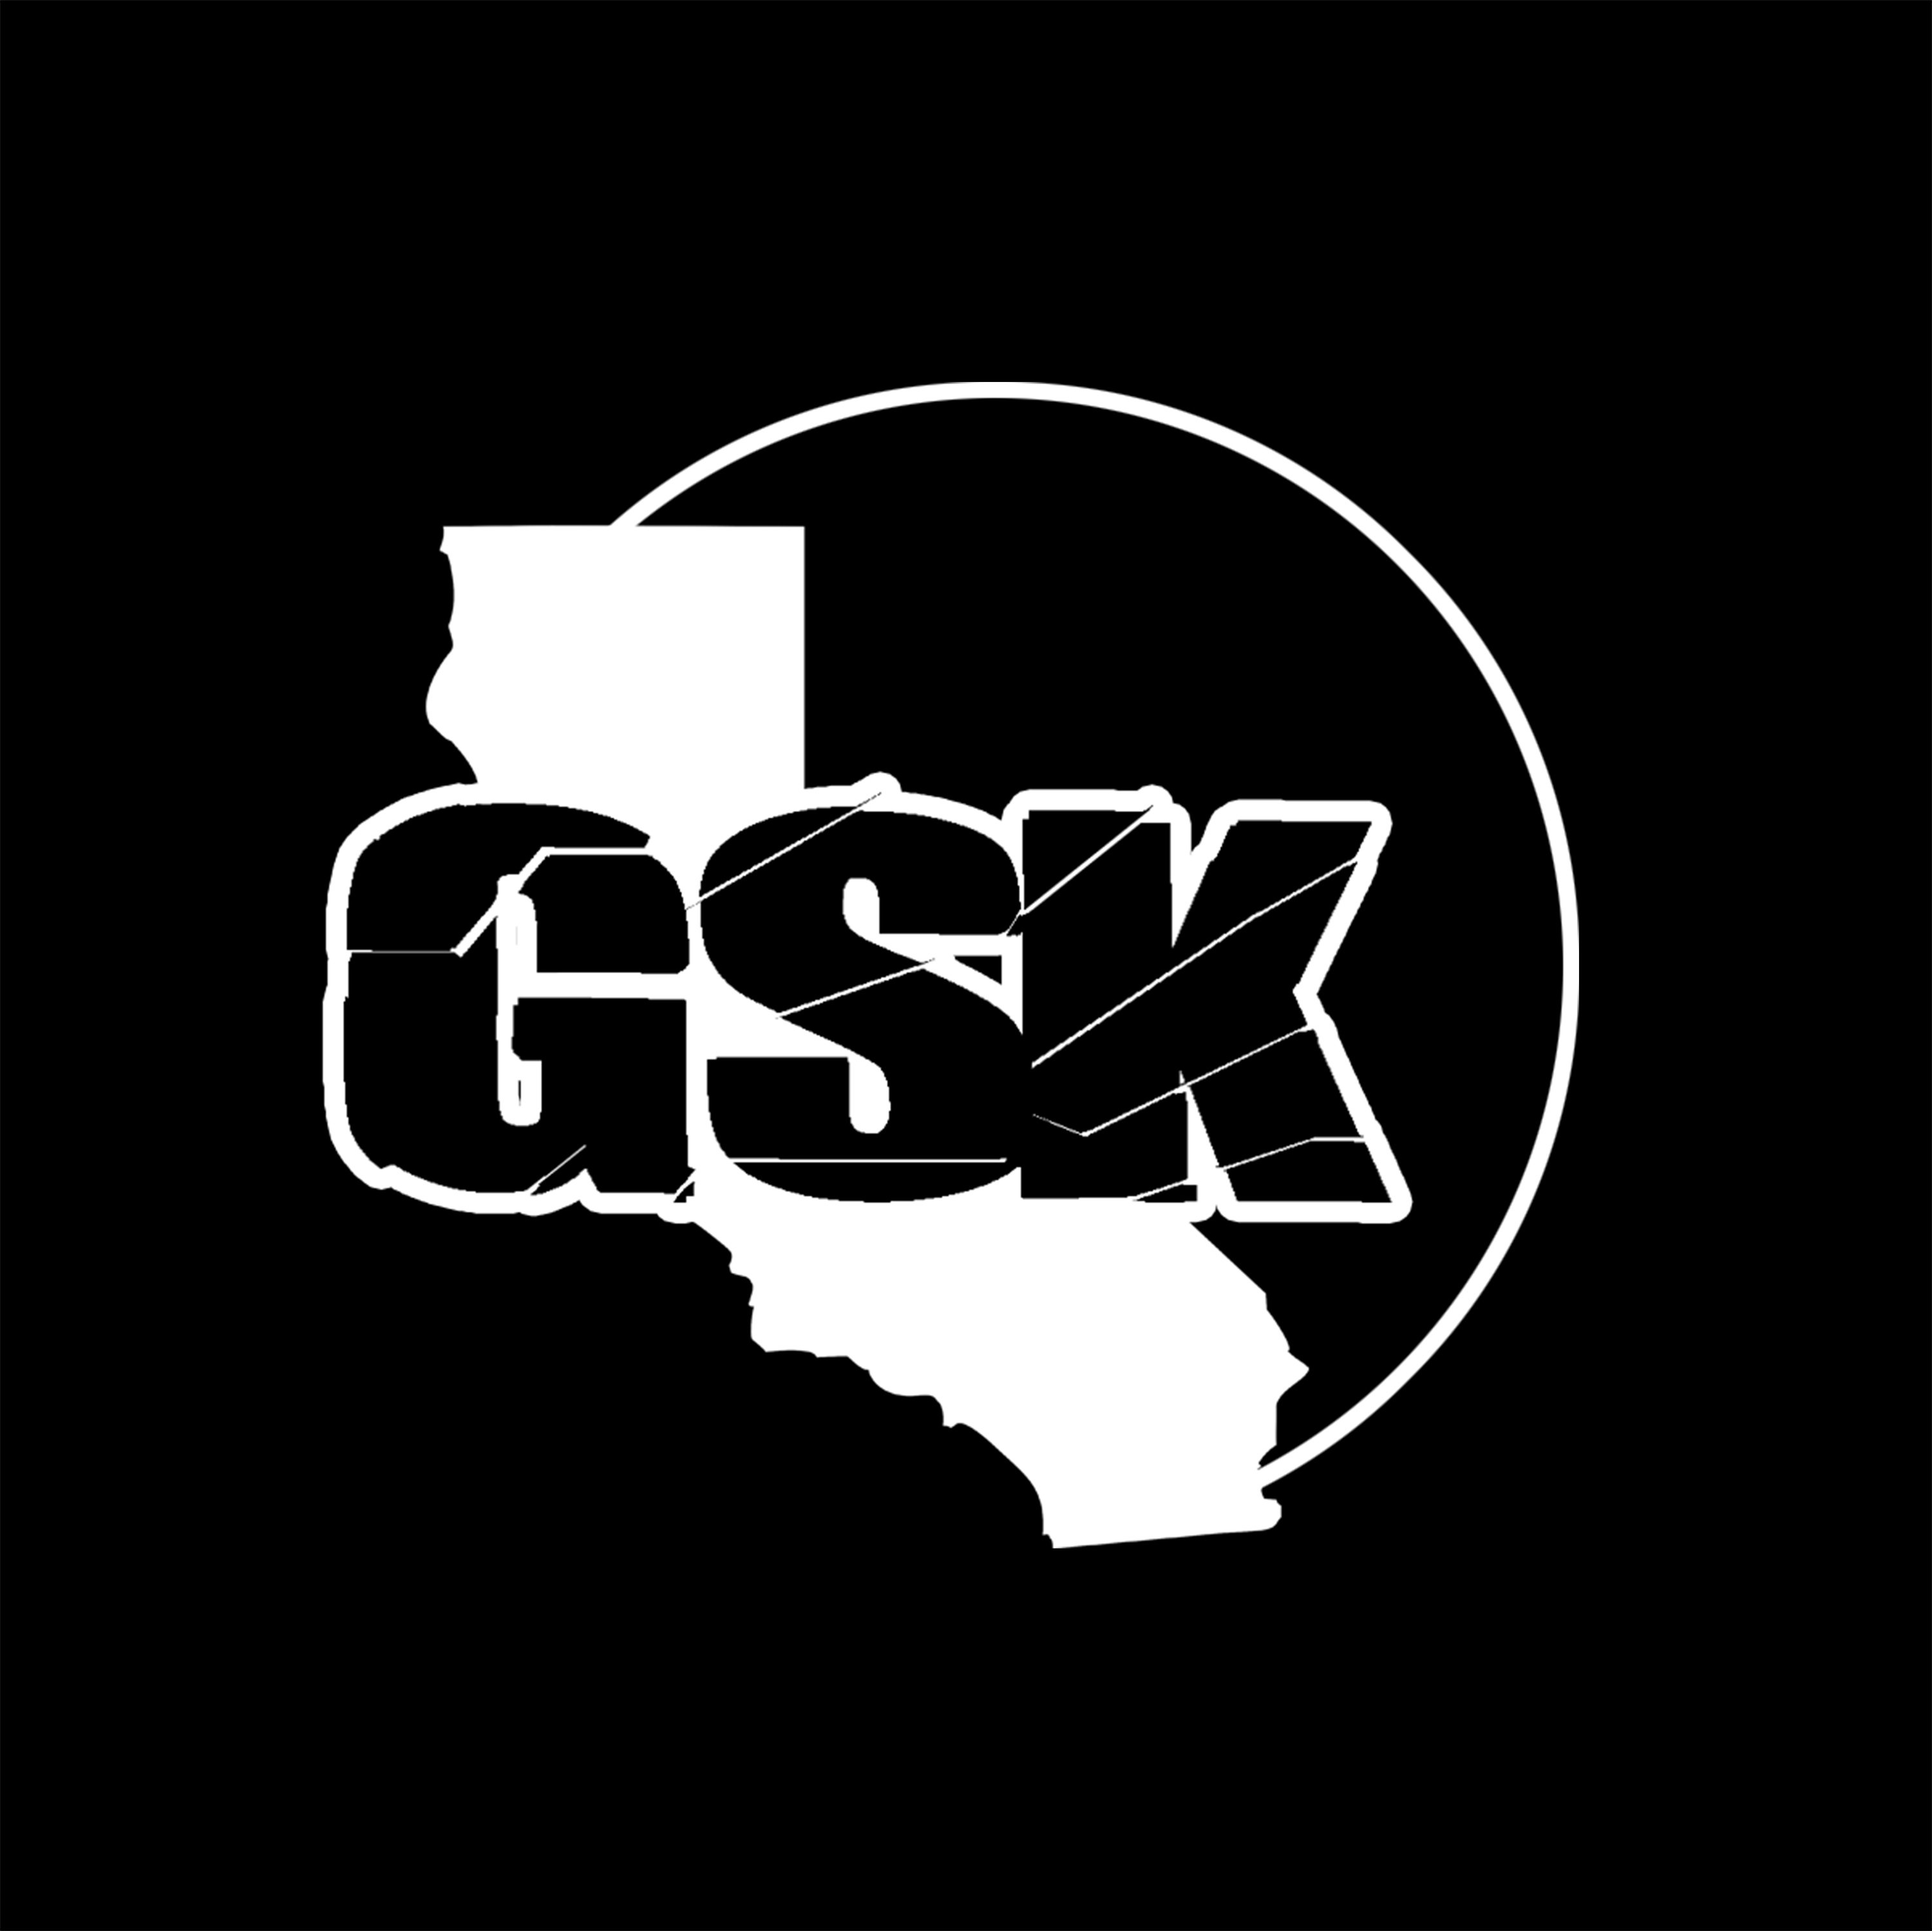 Trademark Logo GSK